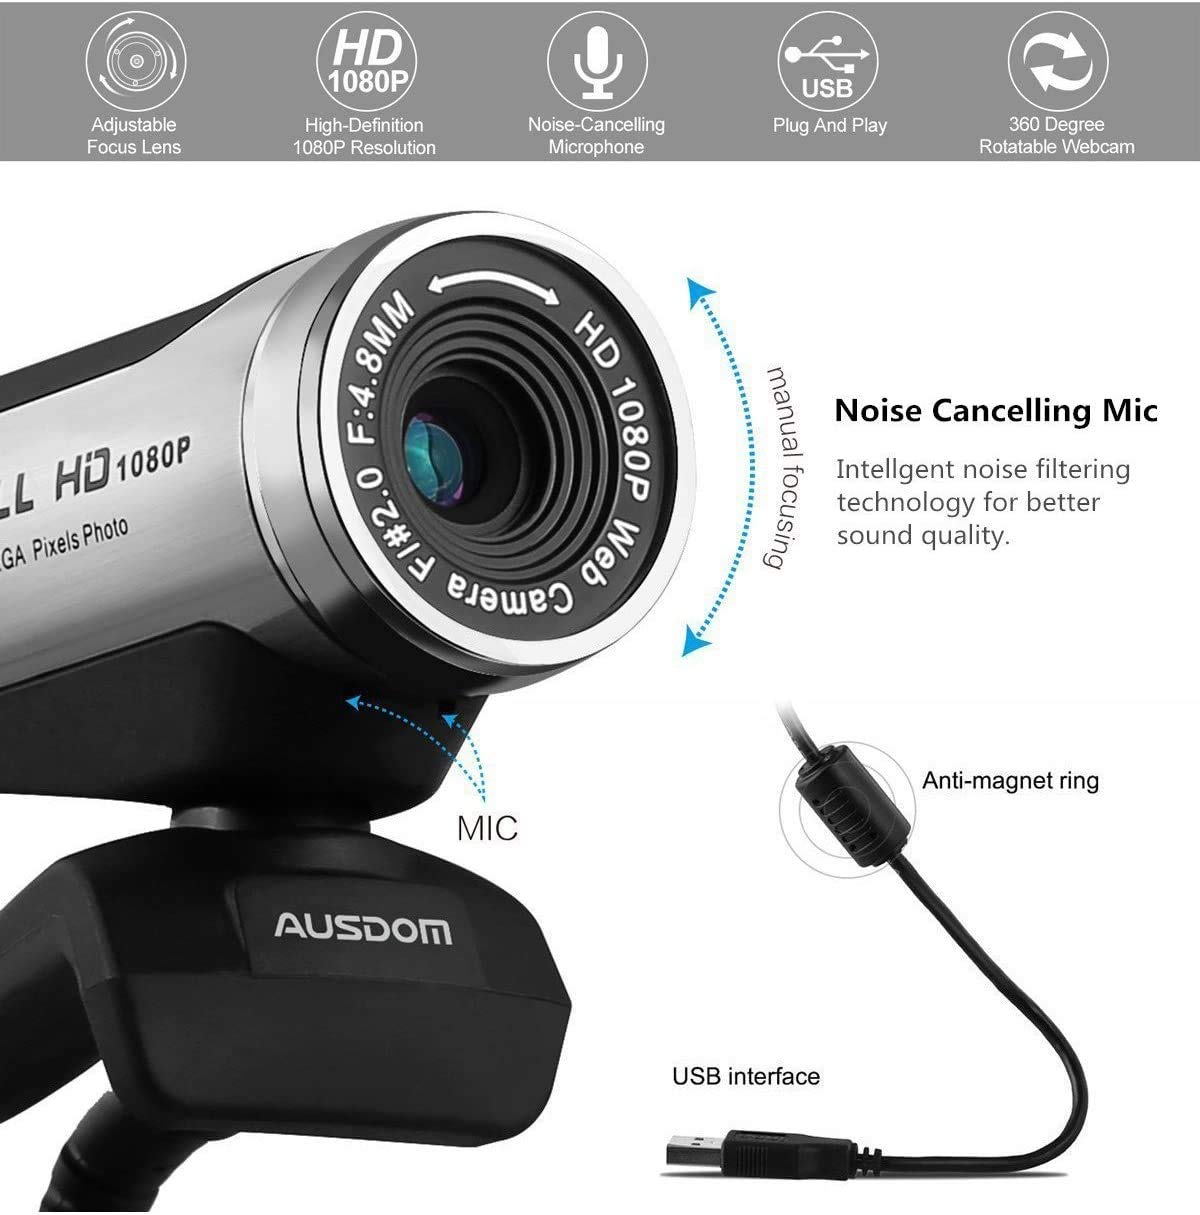 AUSDOM HD Webcam 1080P with Microphone, USB Desktop Laptop Web Camera 12.0MP, Auto Exposure, Pro Streaming Computer Camera for Laptop/Desktop/Skype/FaceTime/YouTube/Yahoo Messenger/Zoom